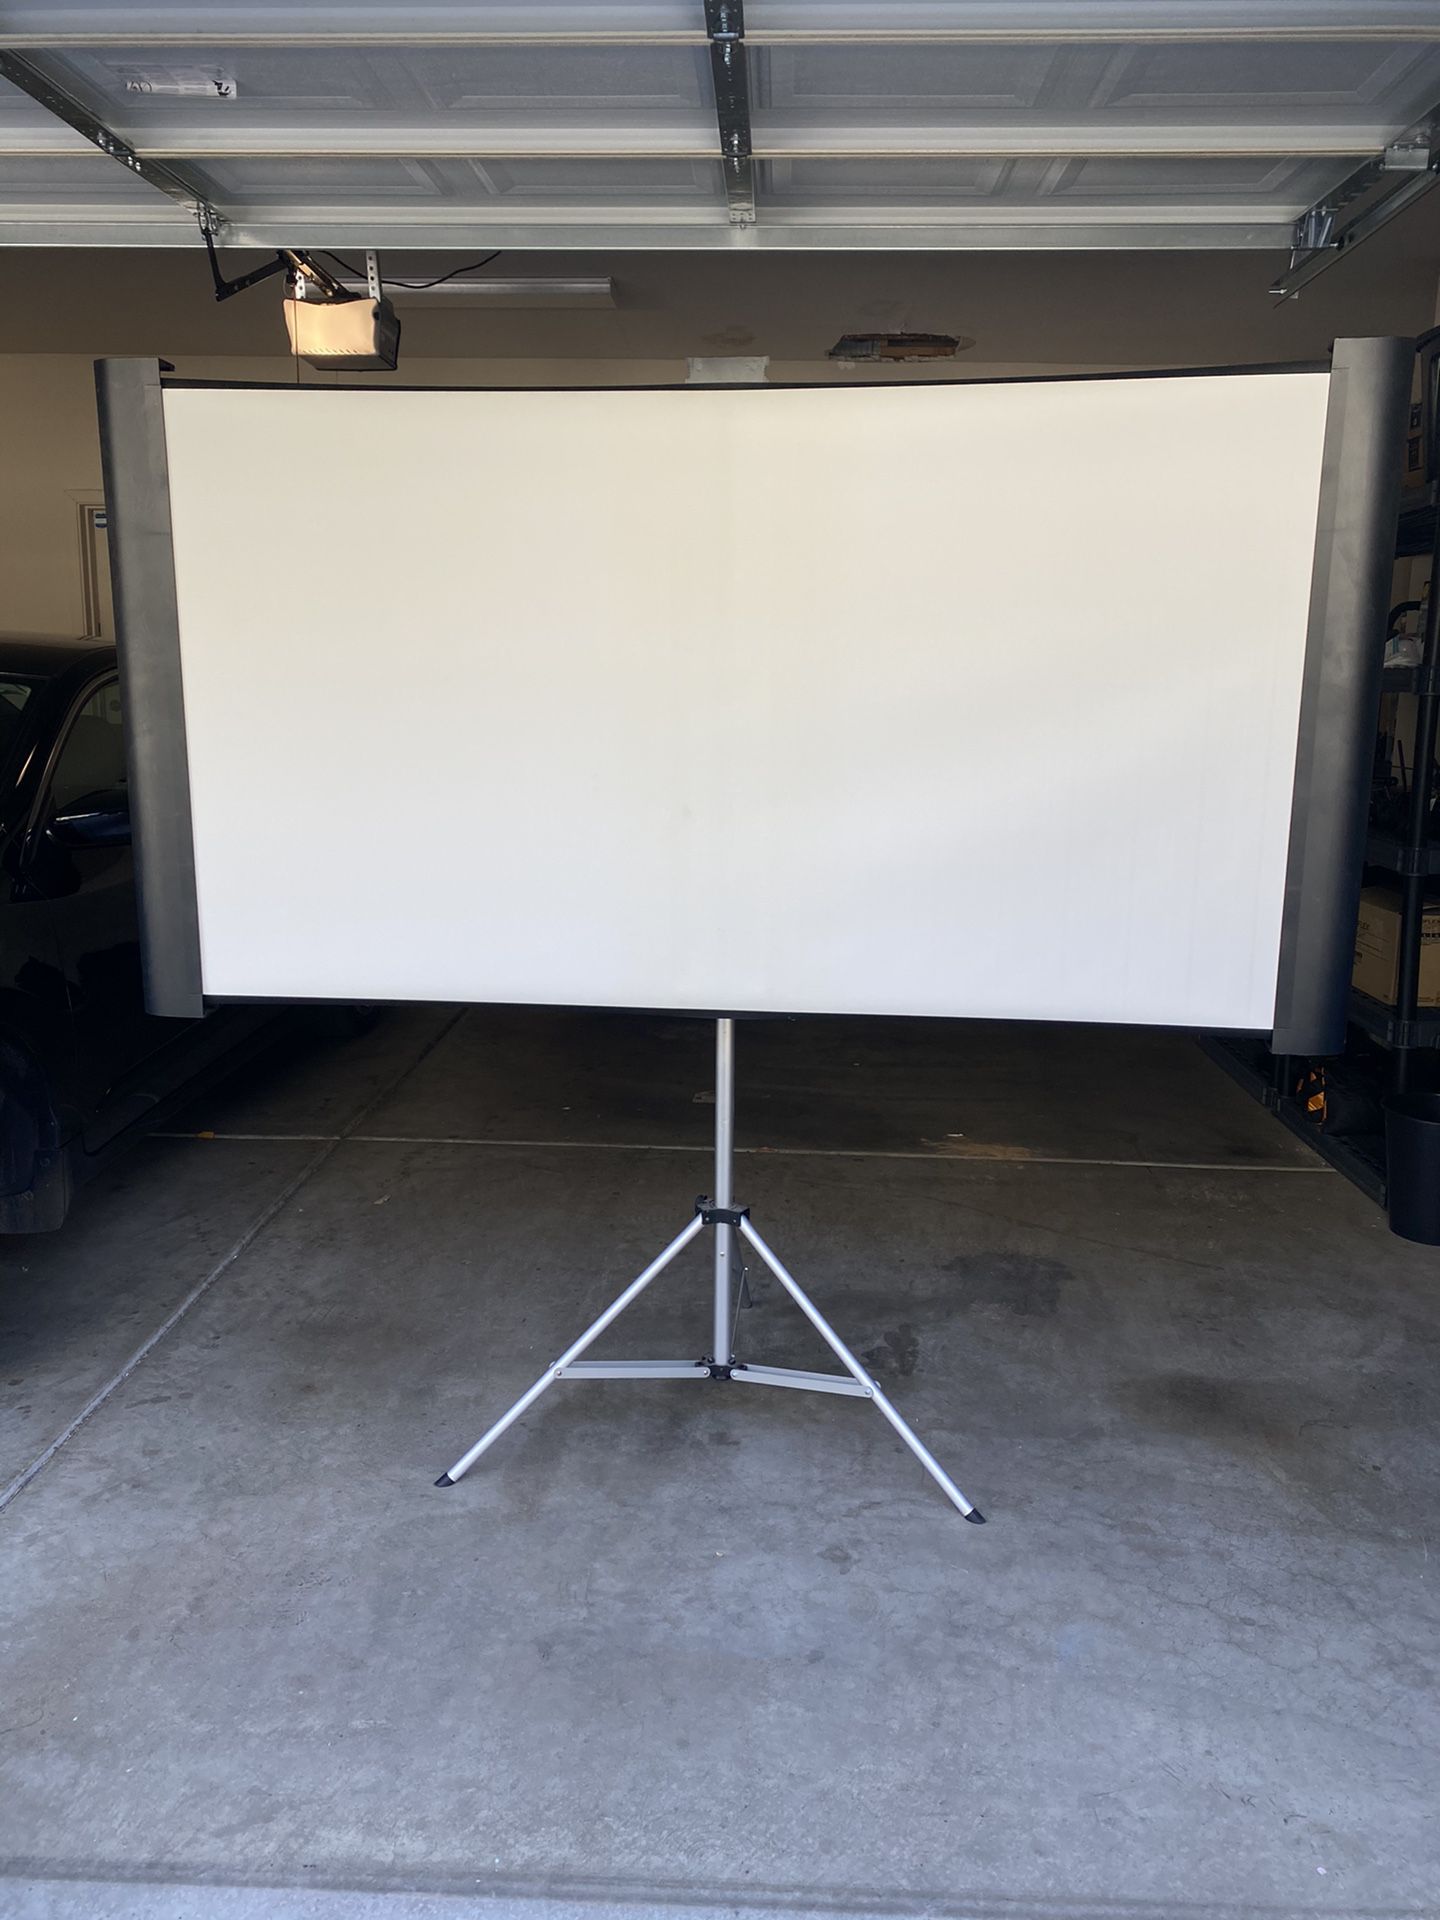 Folding movie screen (projector screen)